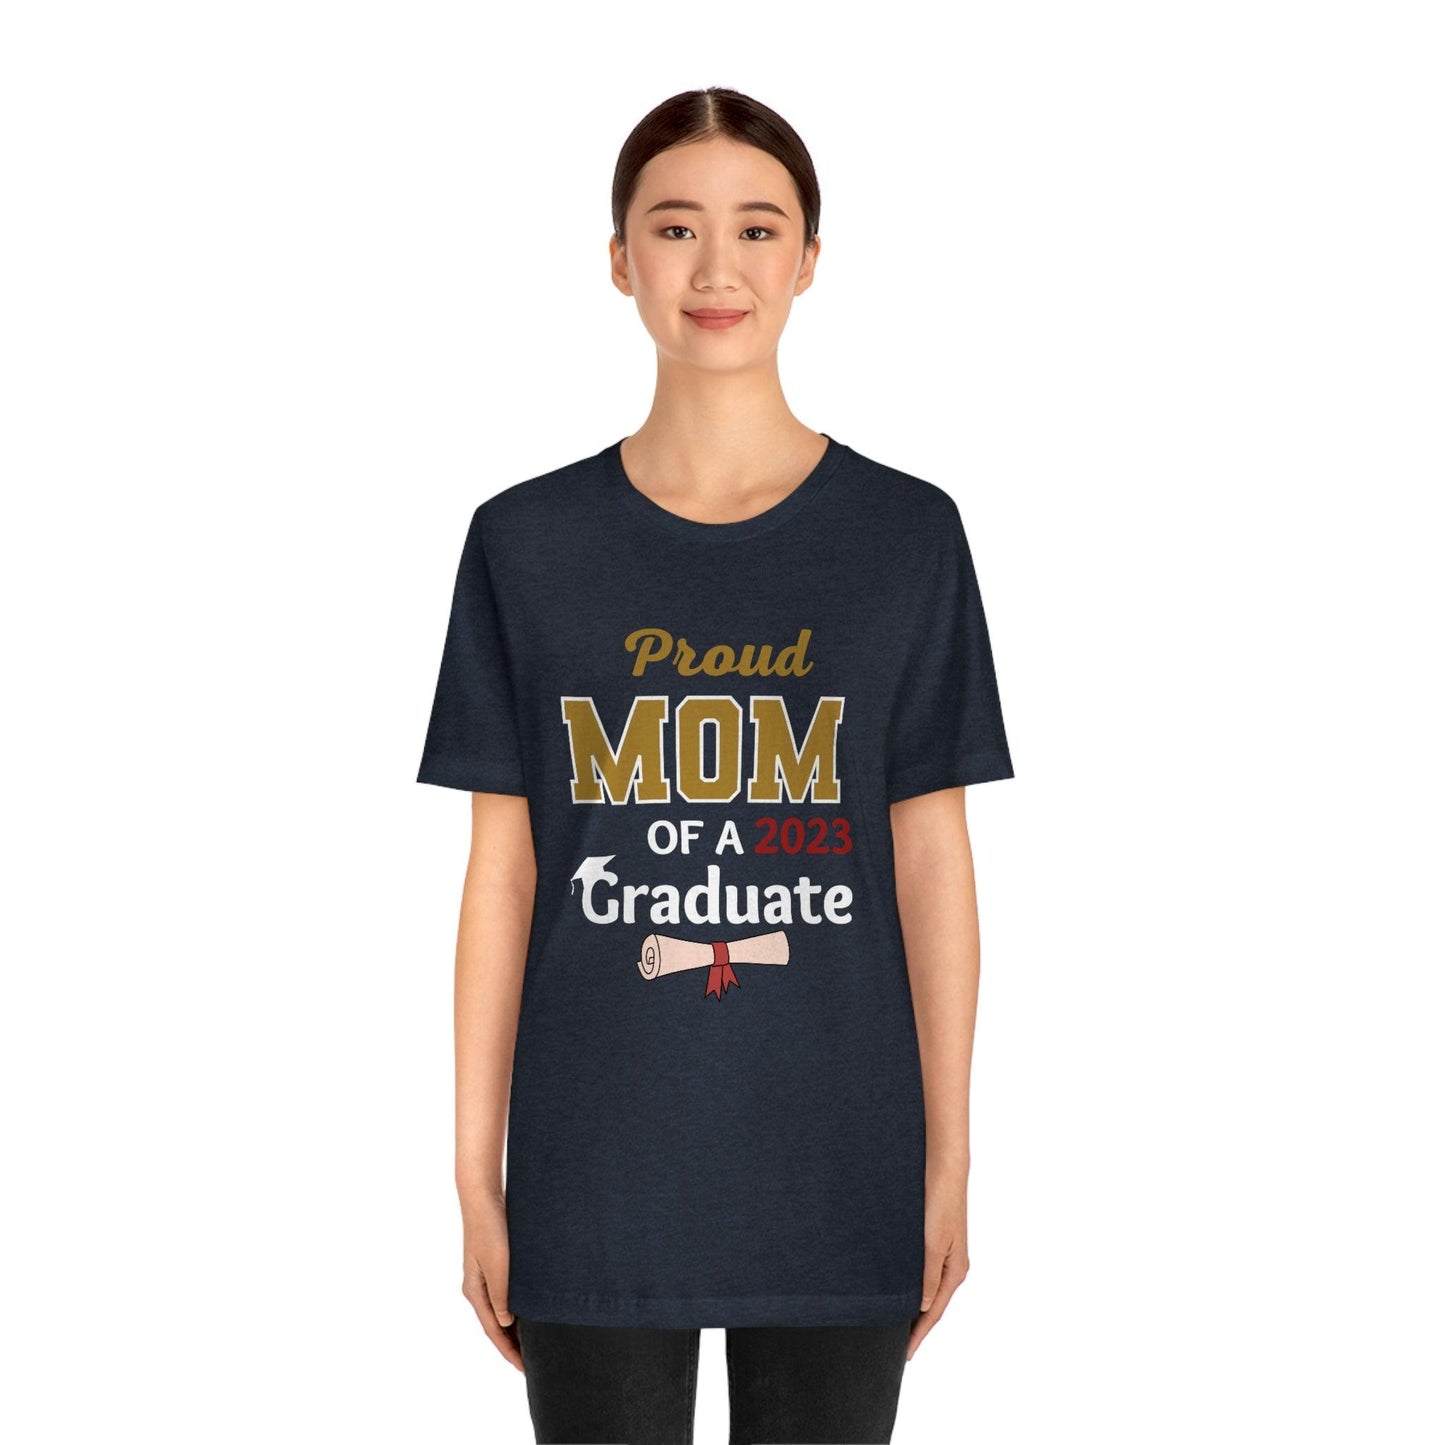 Proud Mom Of a Graduate shirt - Graduation shirt - Graduation gift